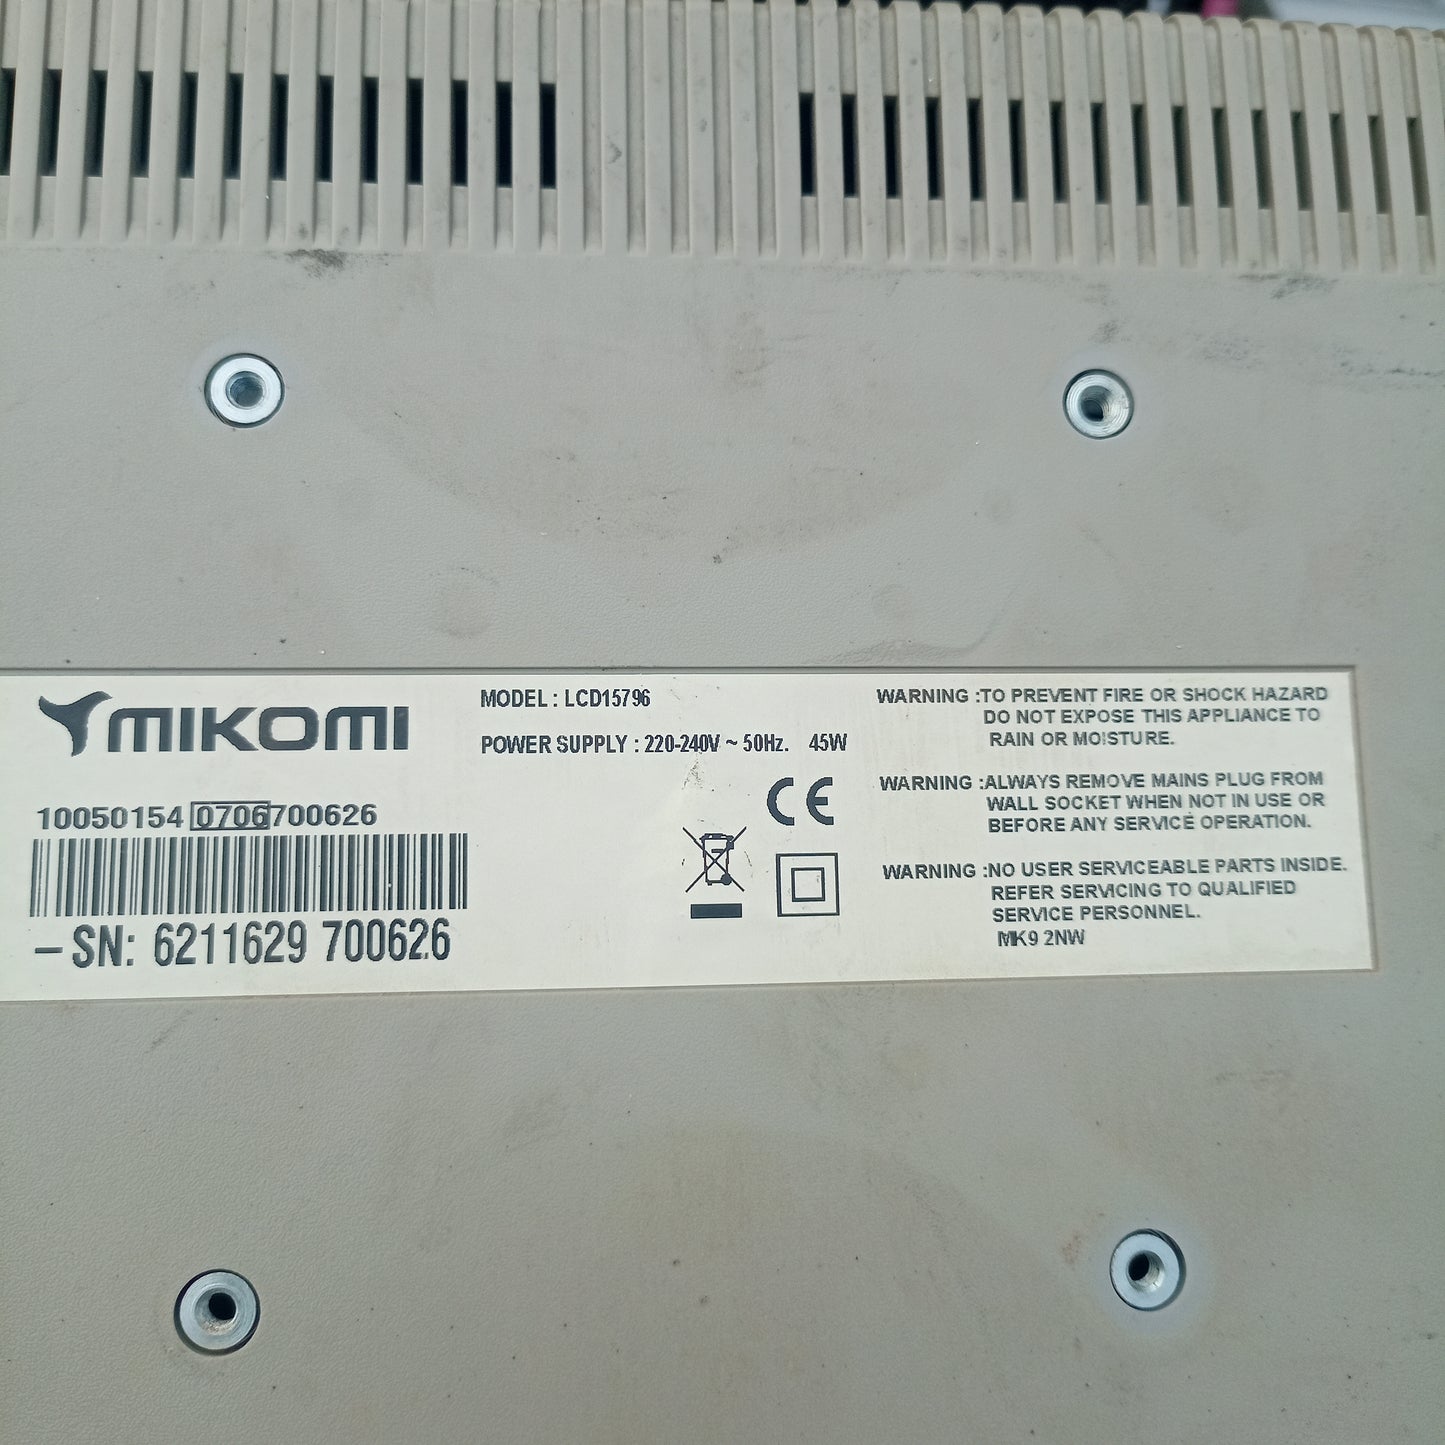 MIKOMI 15 Inch LCD15796 HD Ready LCD TV - Model number sticker